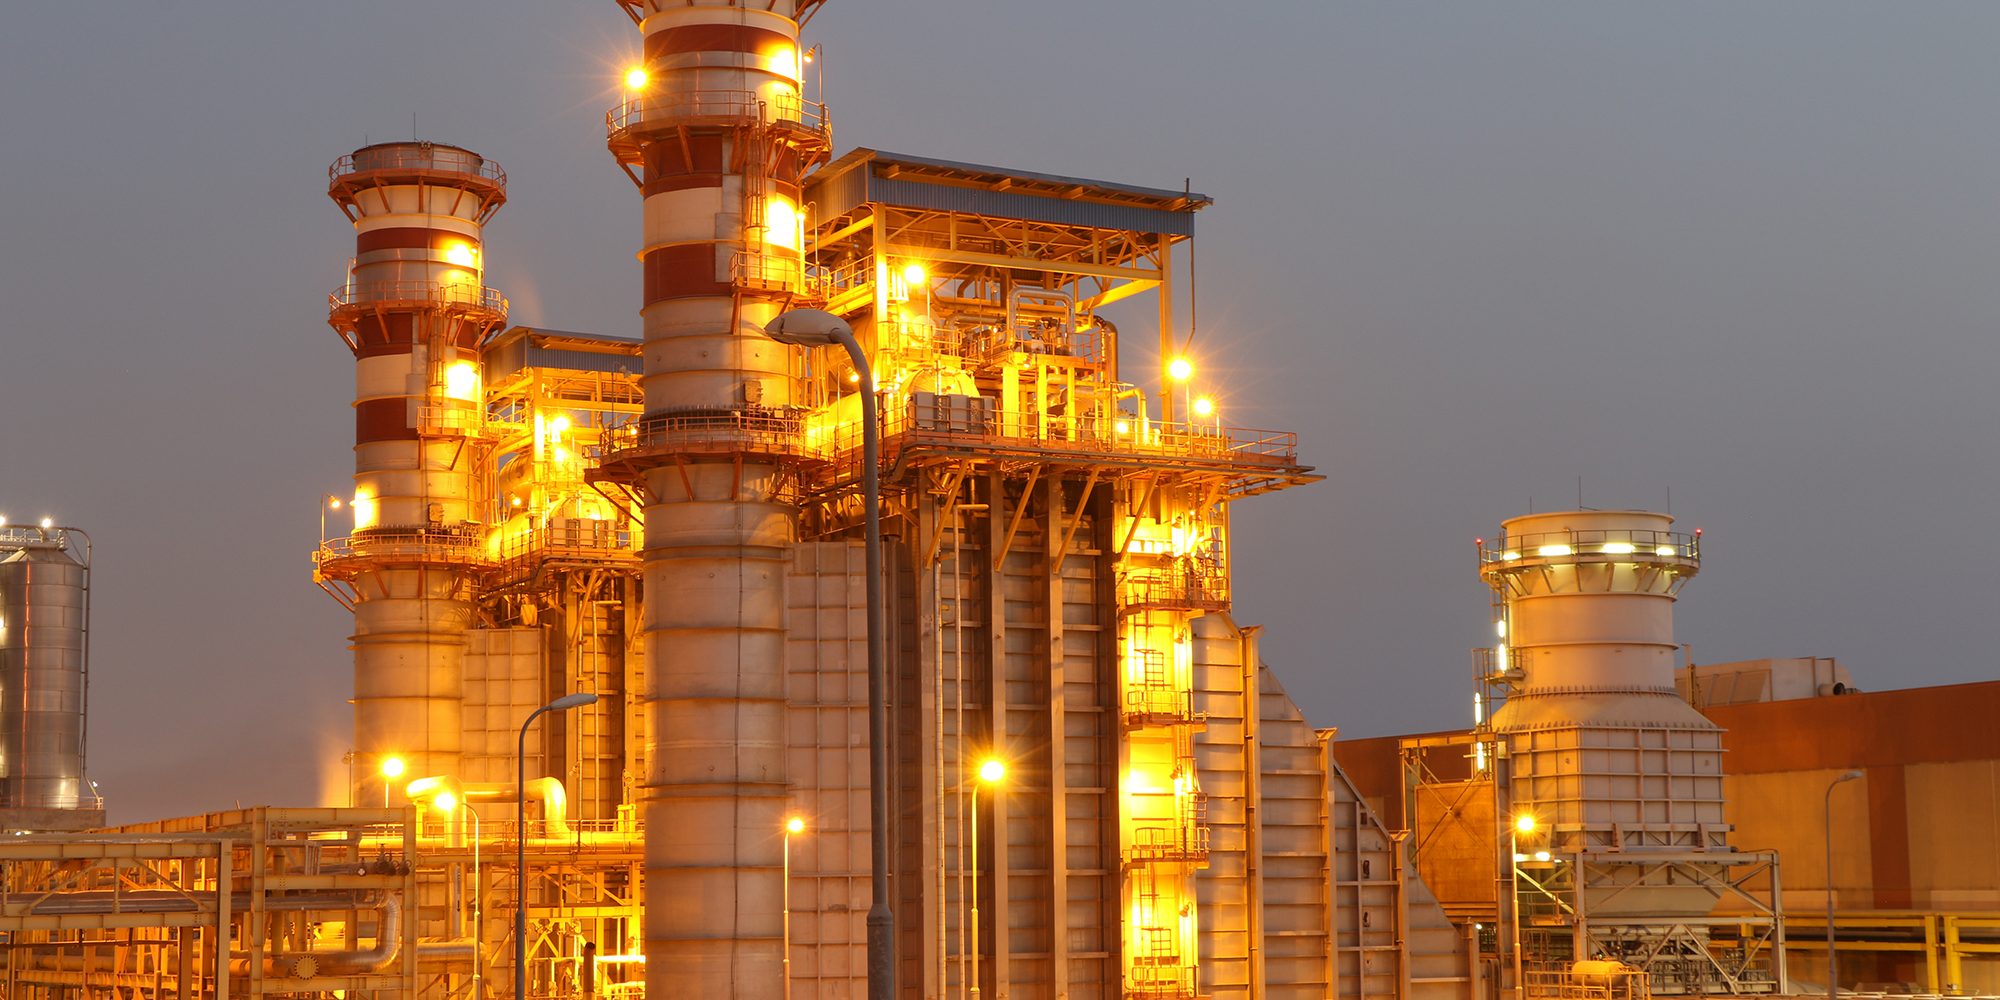 Bushehr Petrochemical